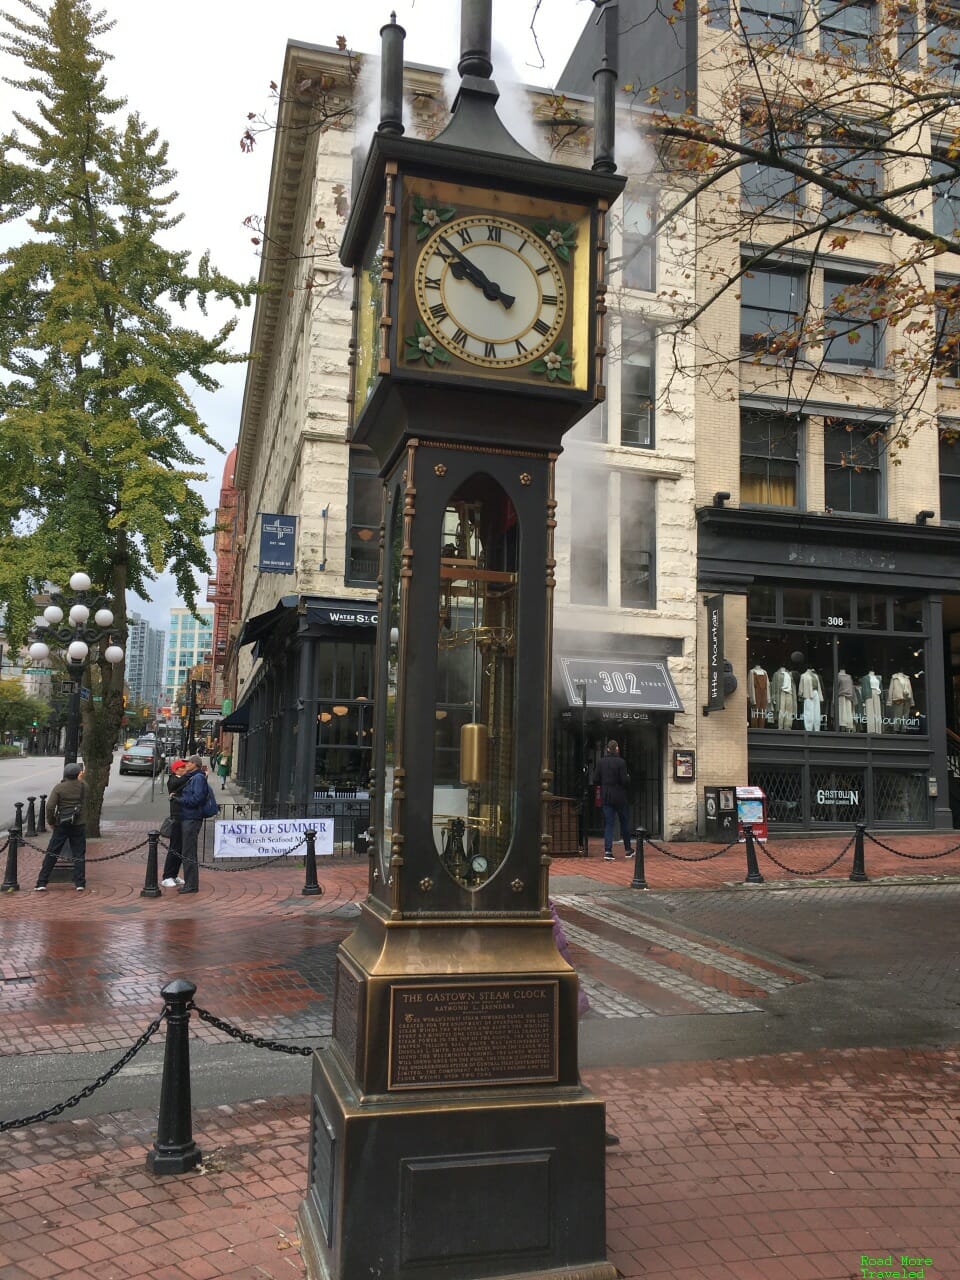 Morning Walking tour of Vancouver - Gastown Steam Clock